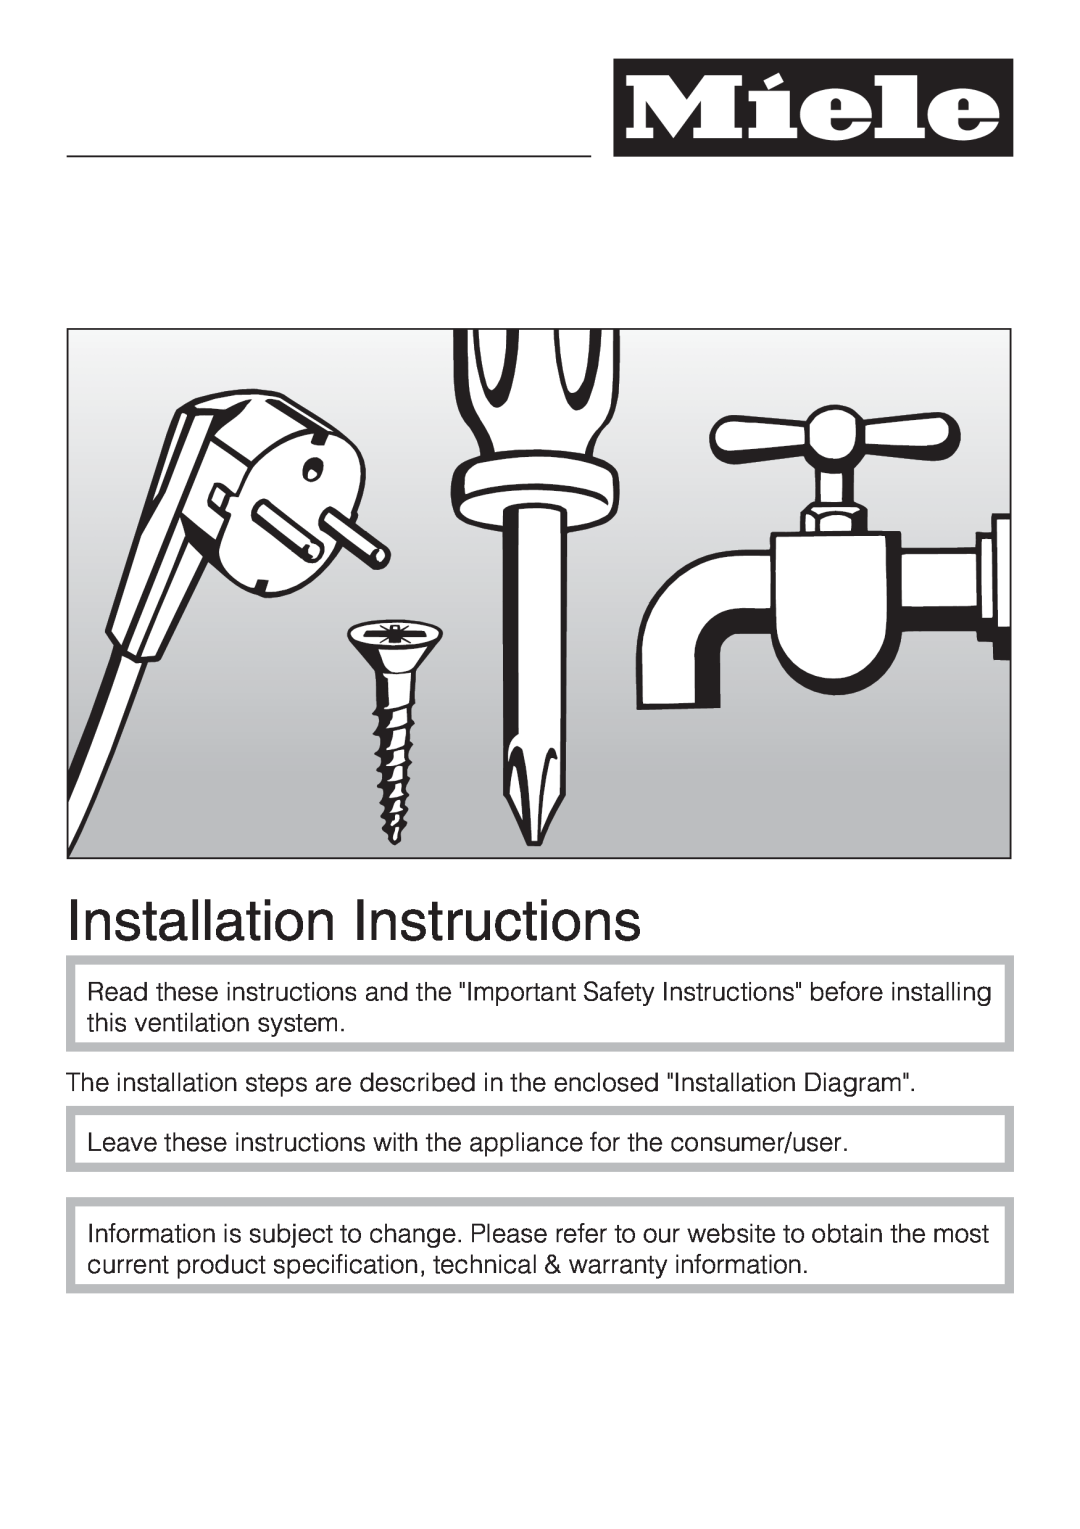 Miele DA 6290 W installation instructions Installation Instructions 